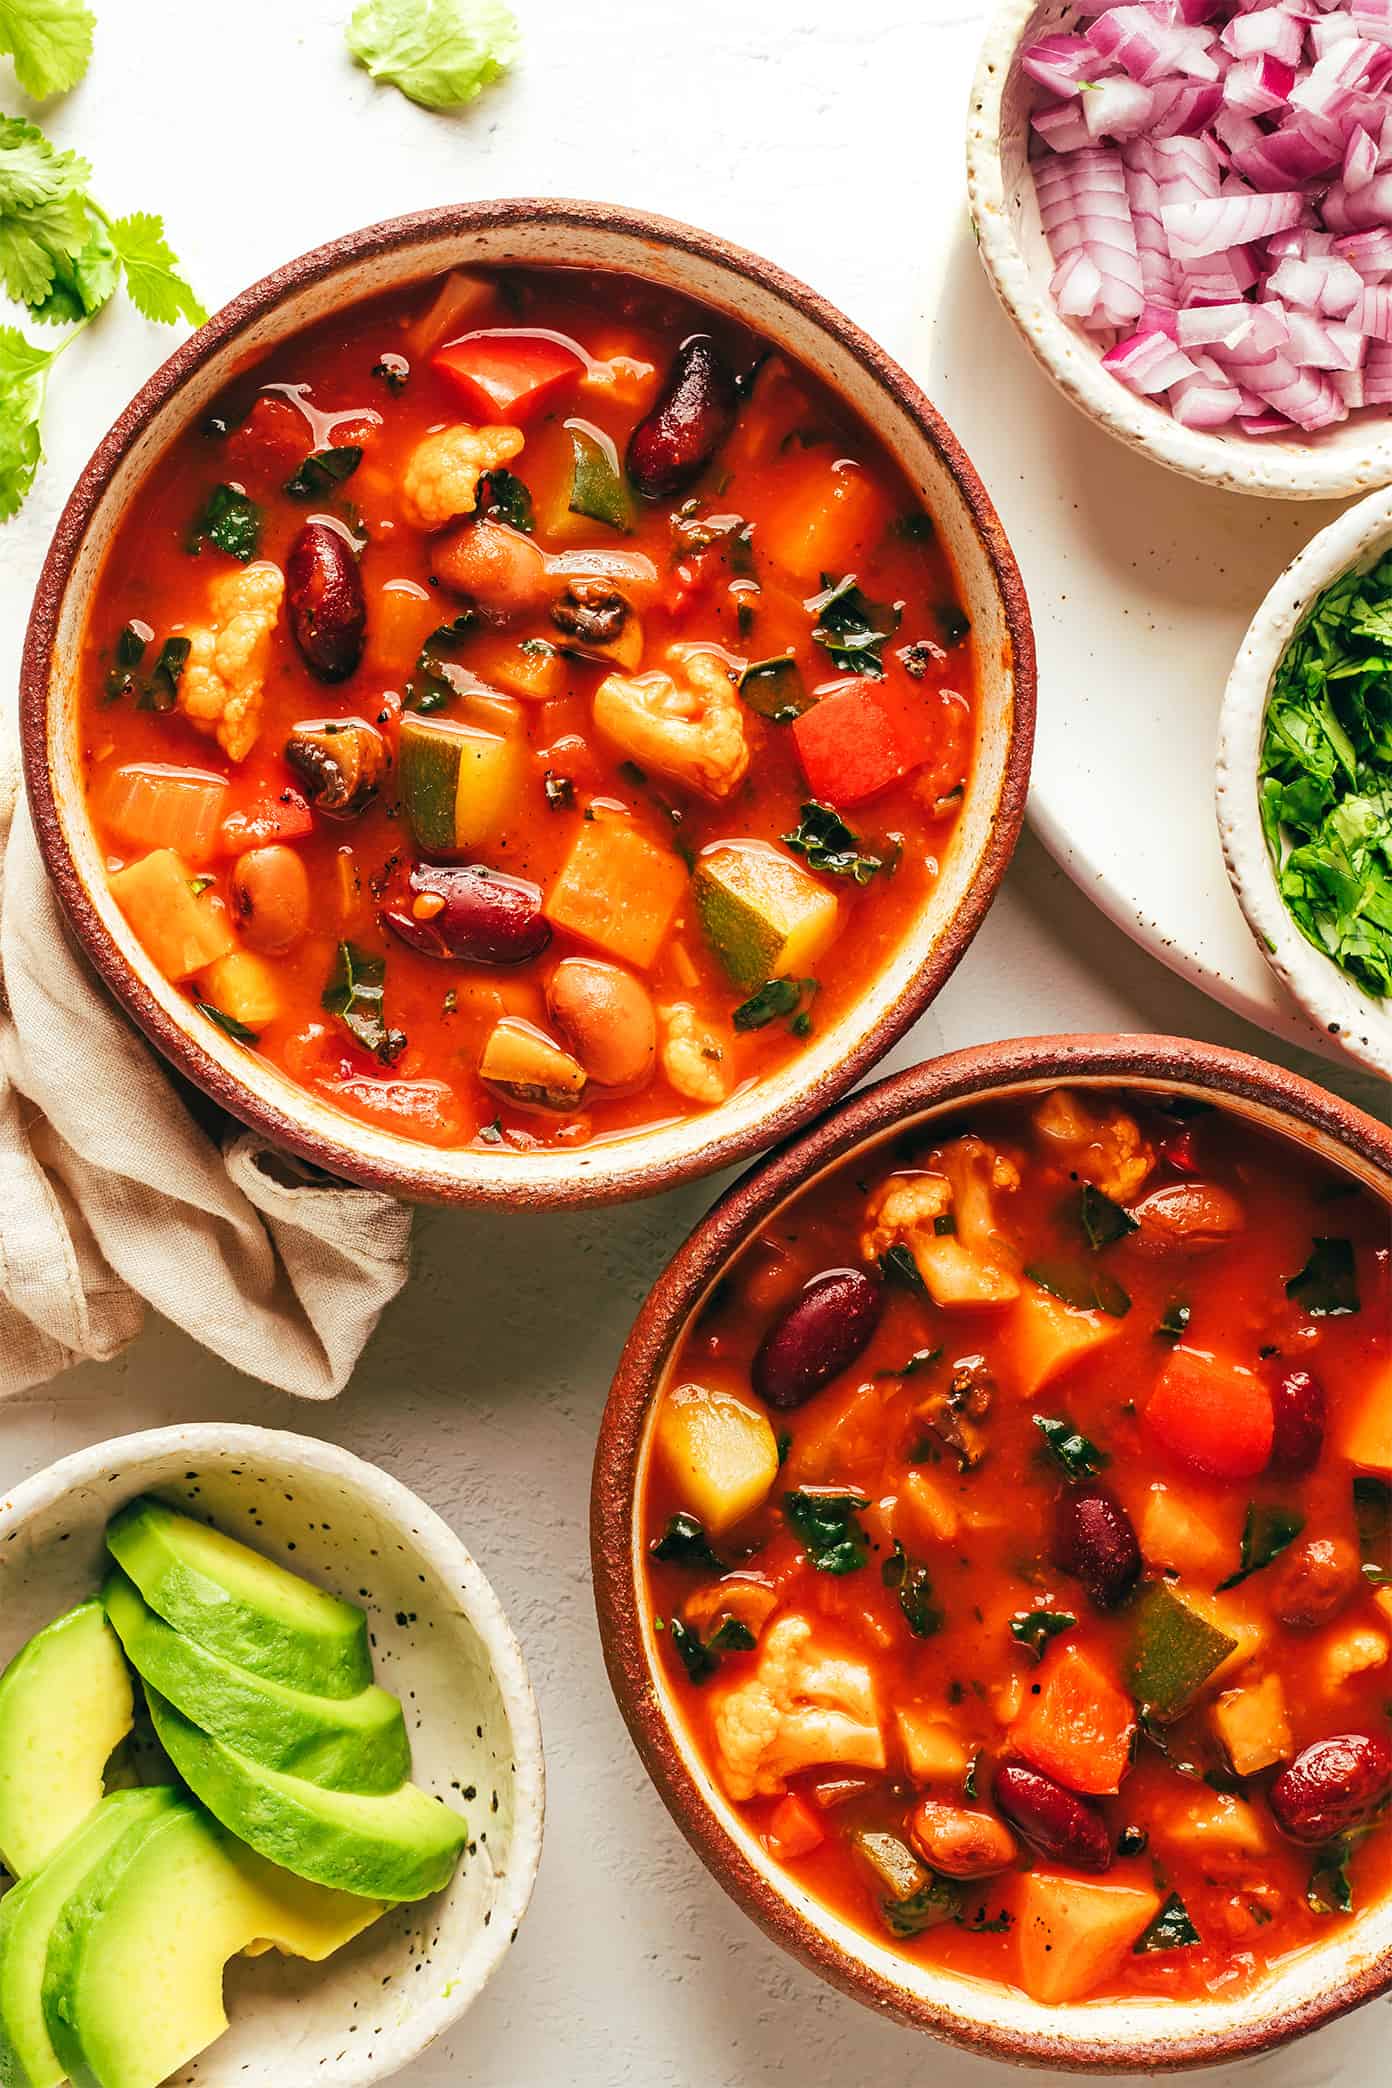 Bowls of vegetarian chili